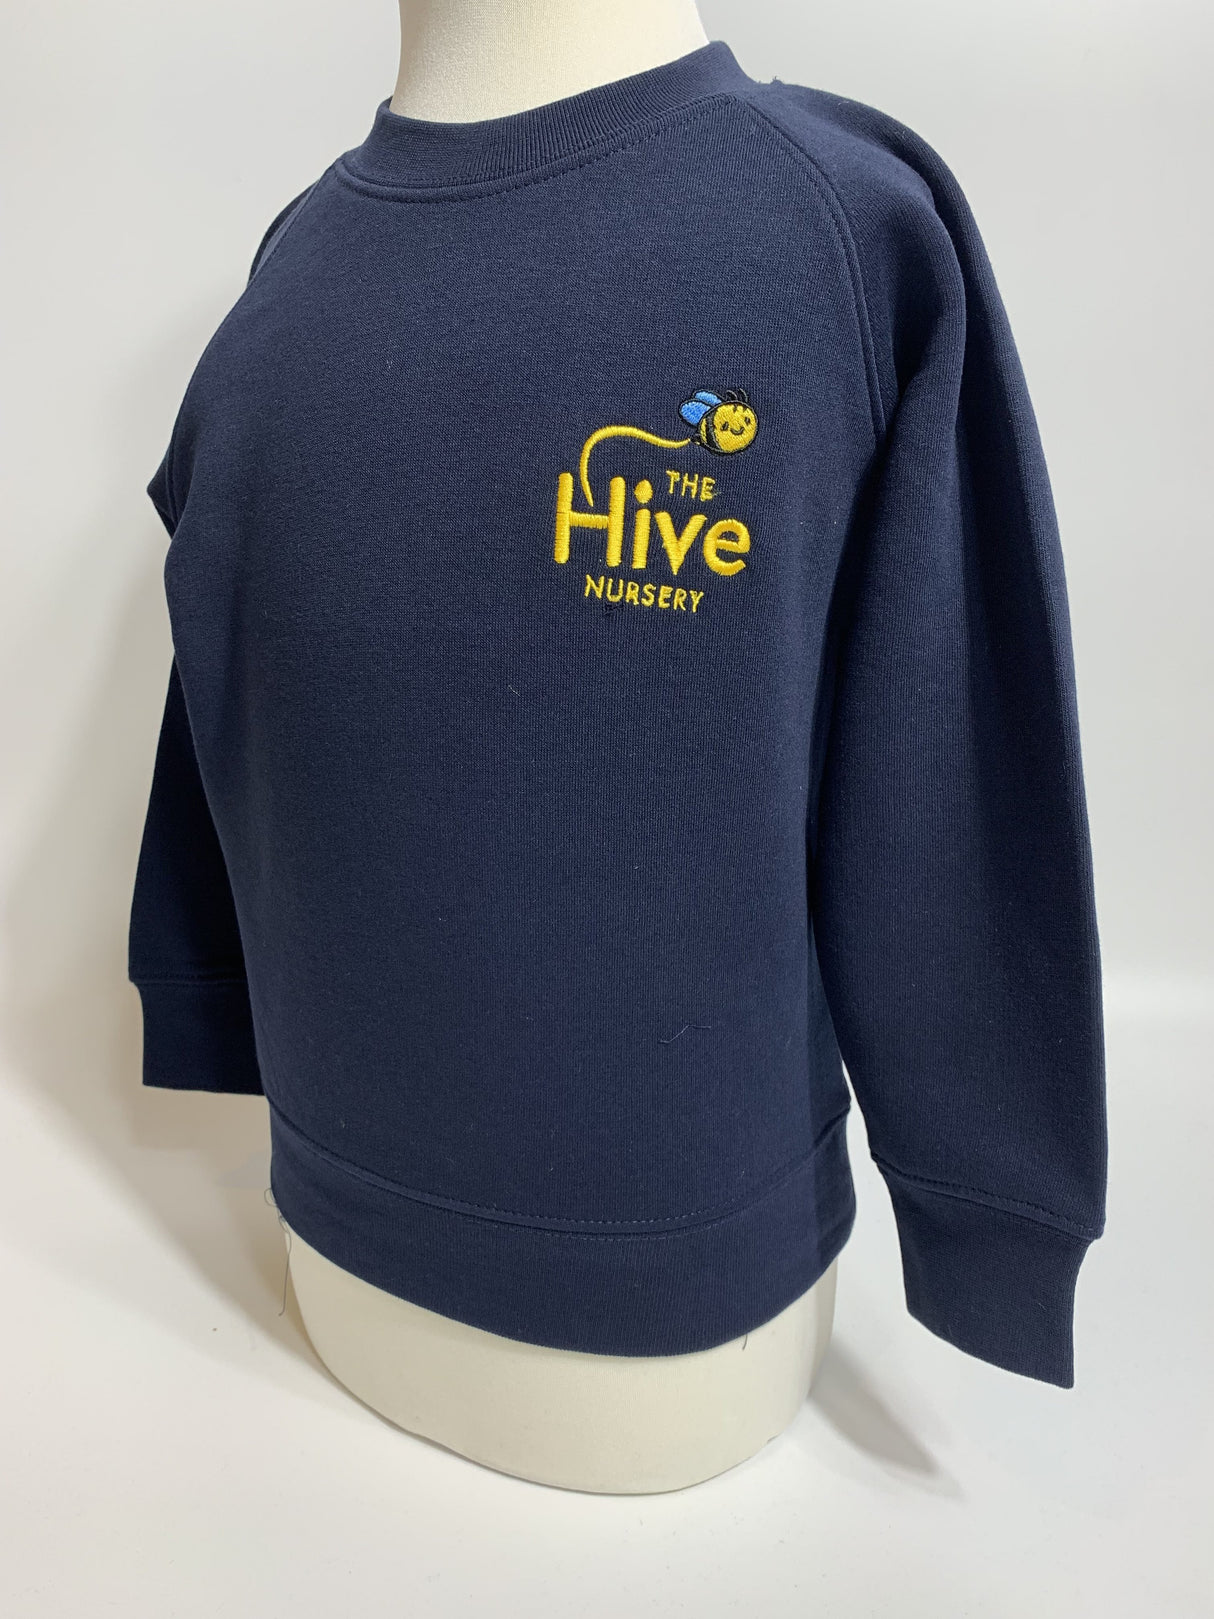 Hive Nursery Navy Sweatshirt